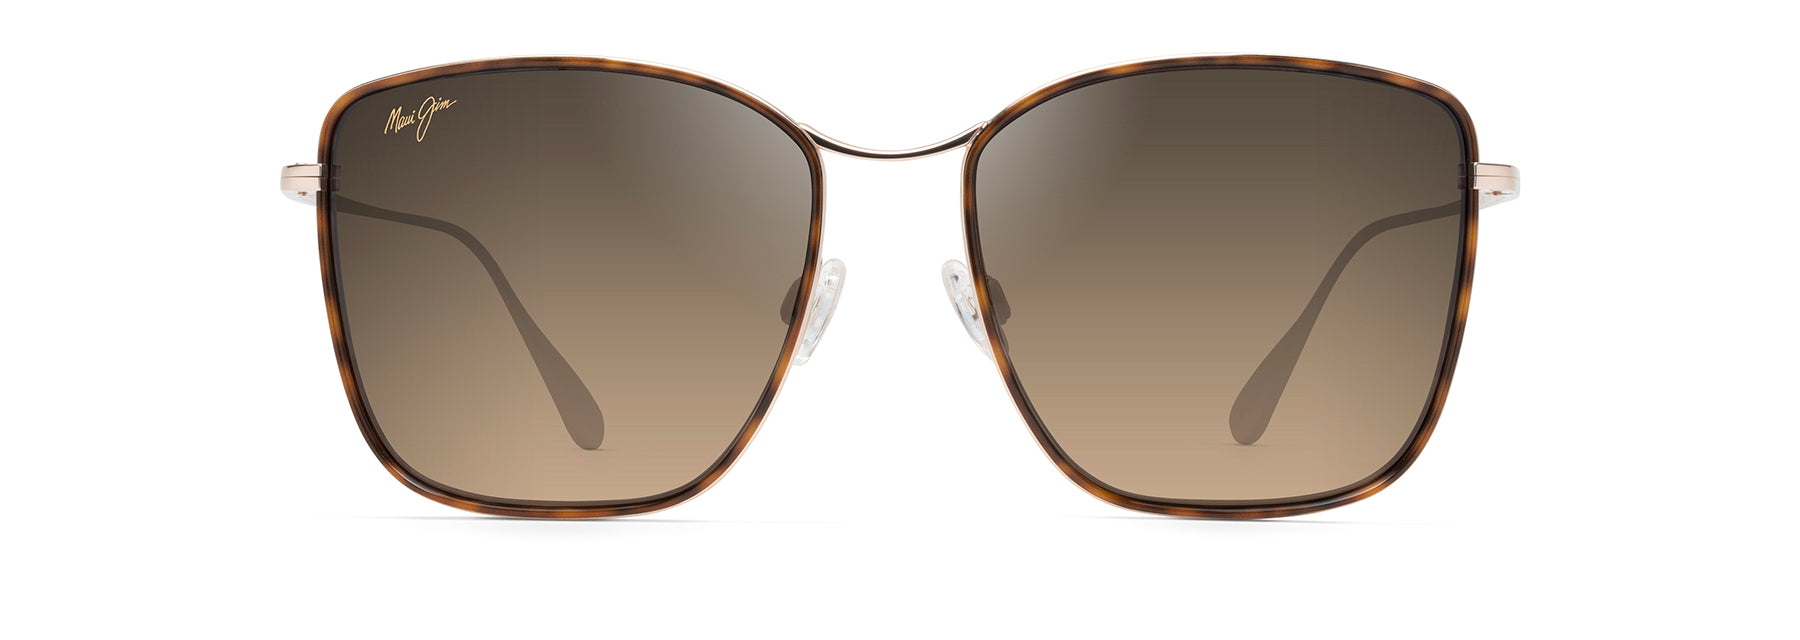 Maui Jim Tiger Lily Sunglasses